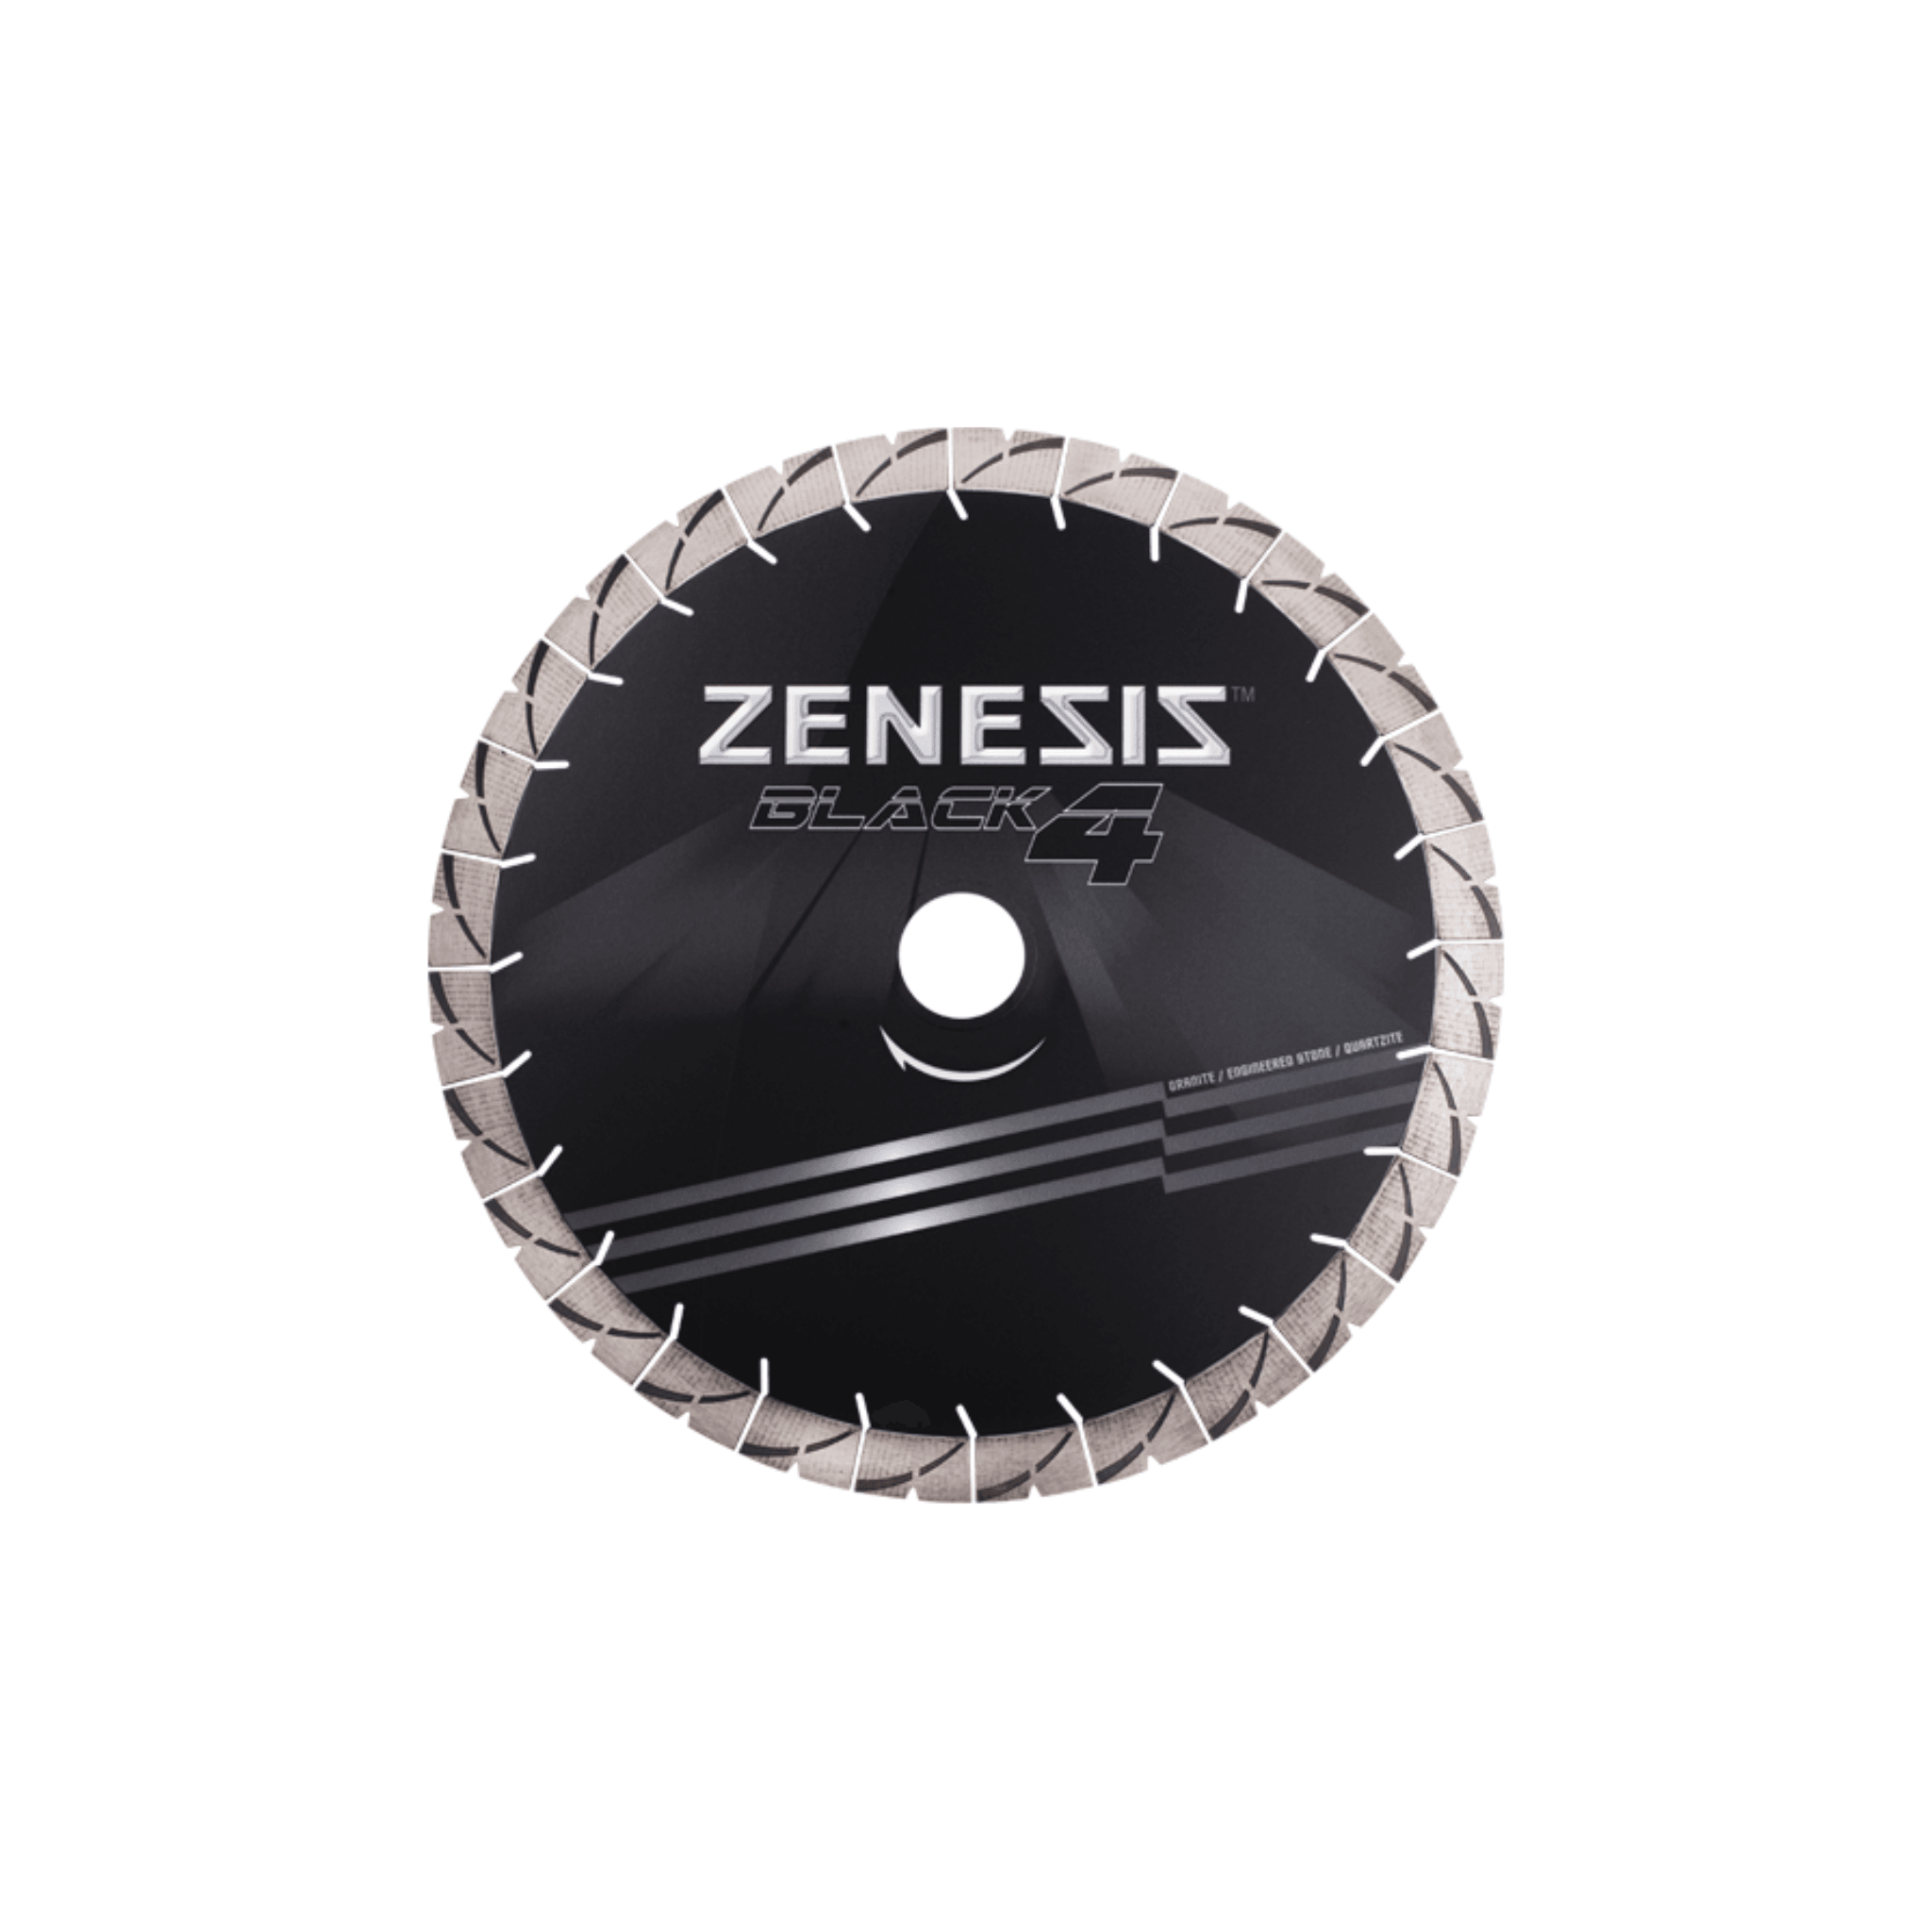 ZENESIS™ Black 4 Blade 16" - Direct Stone Tool Supply, Inc